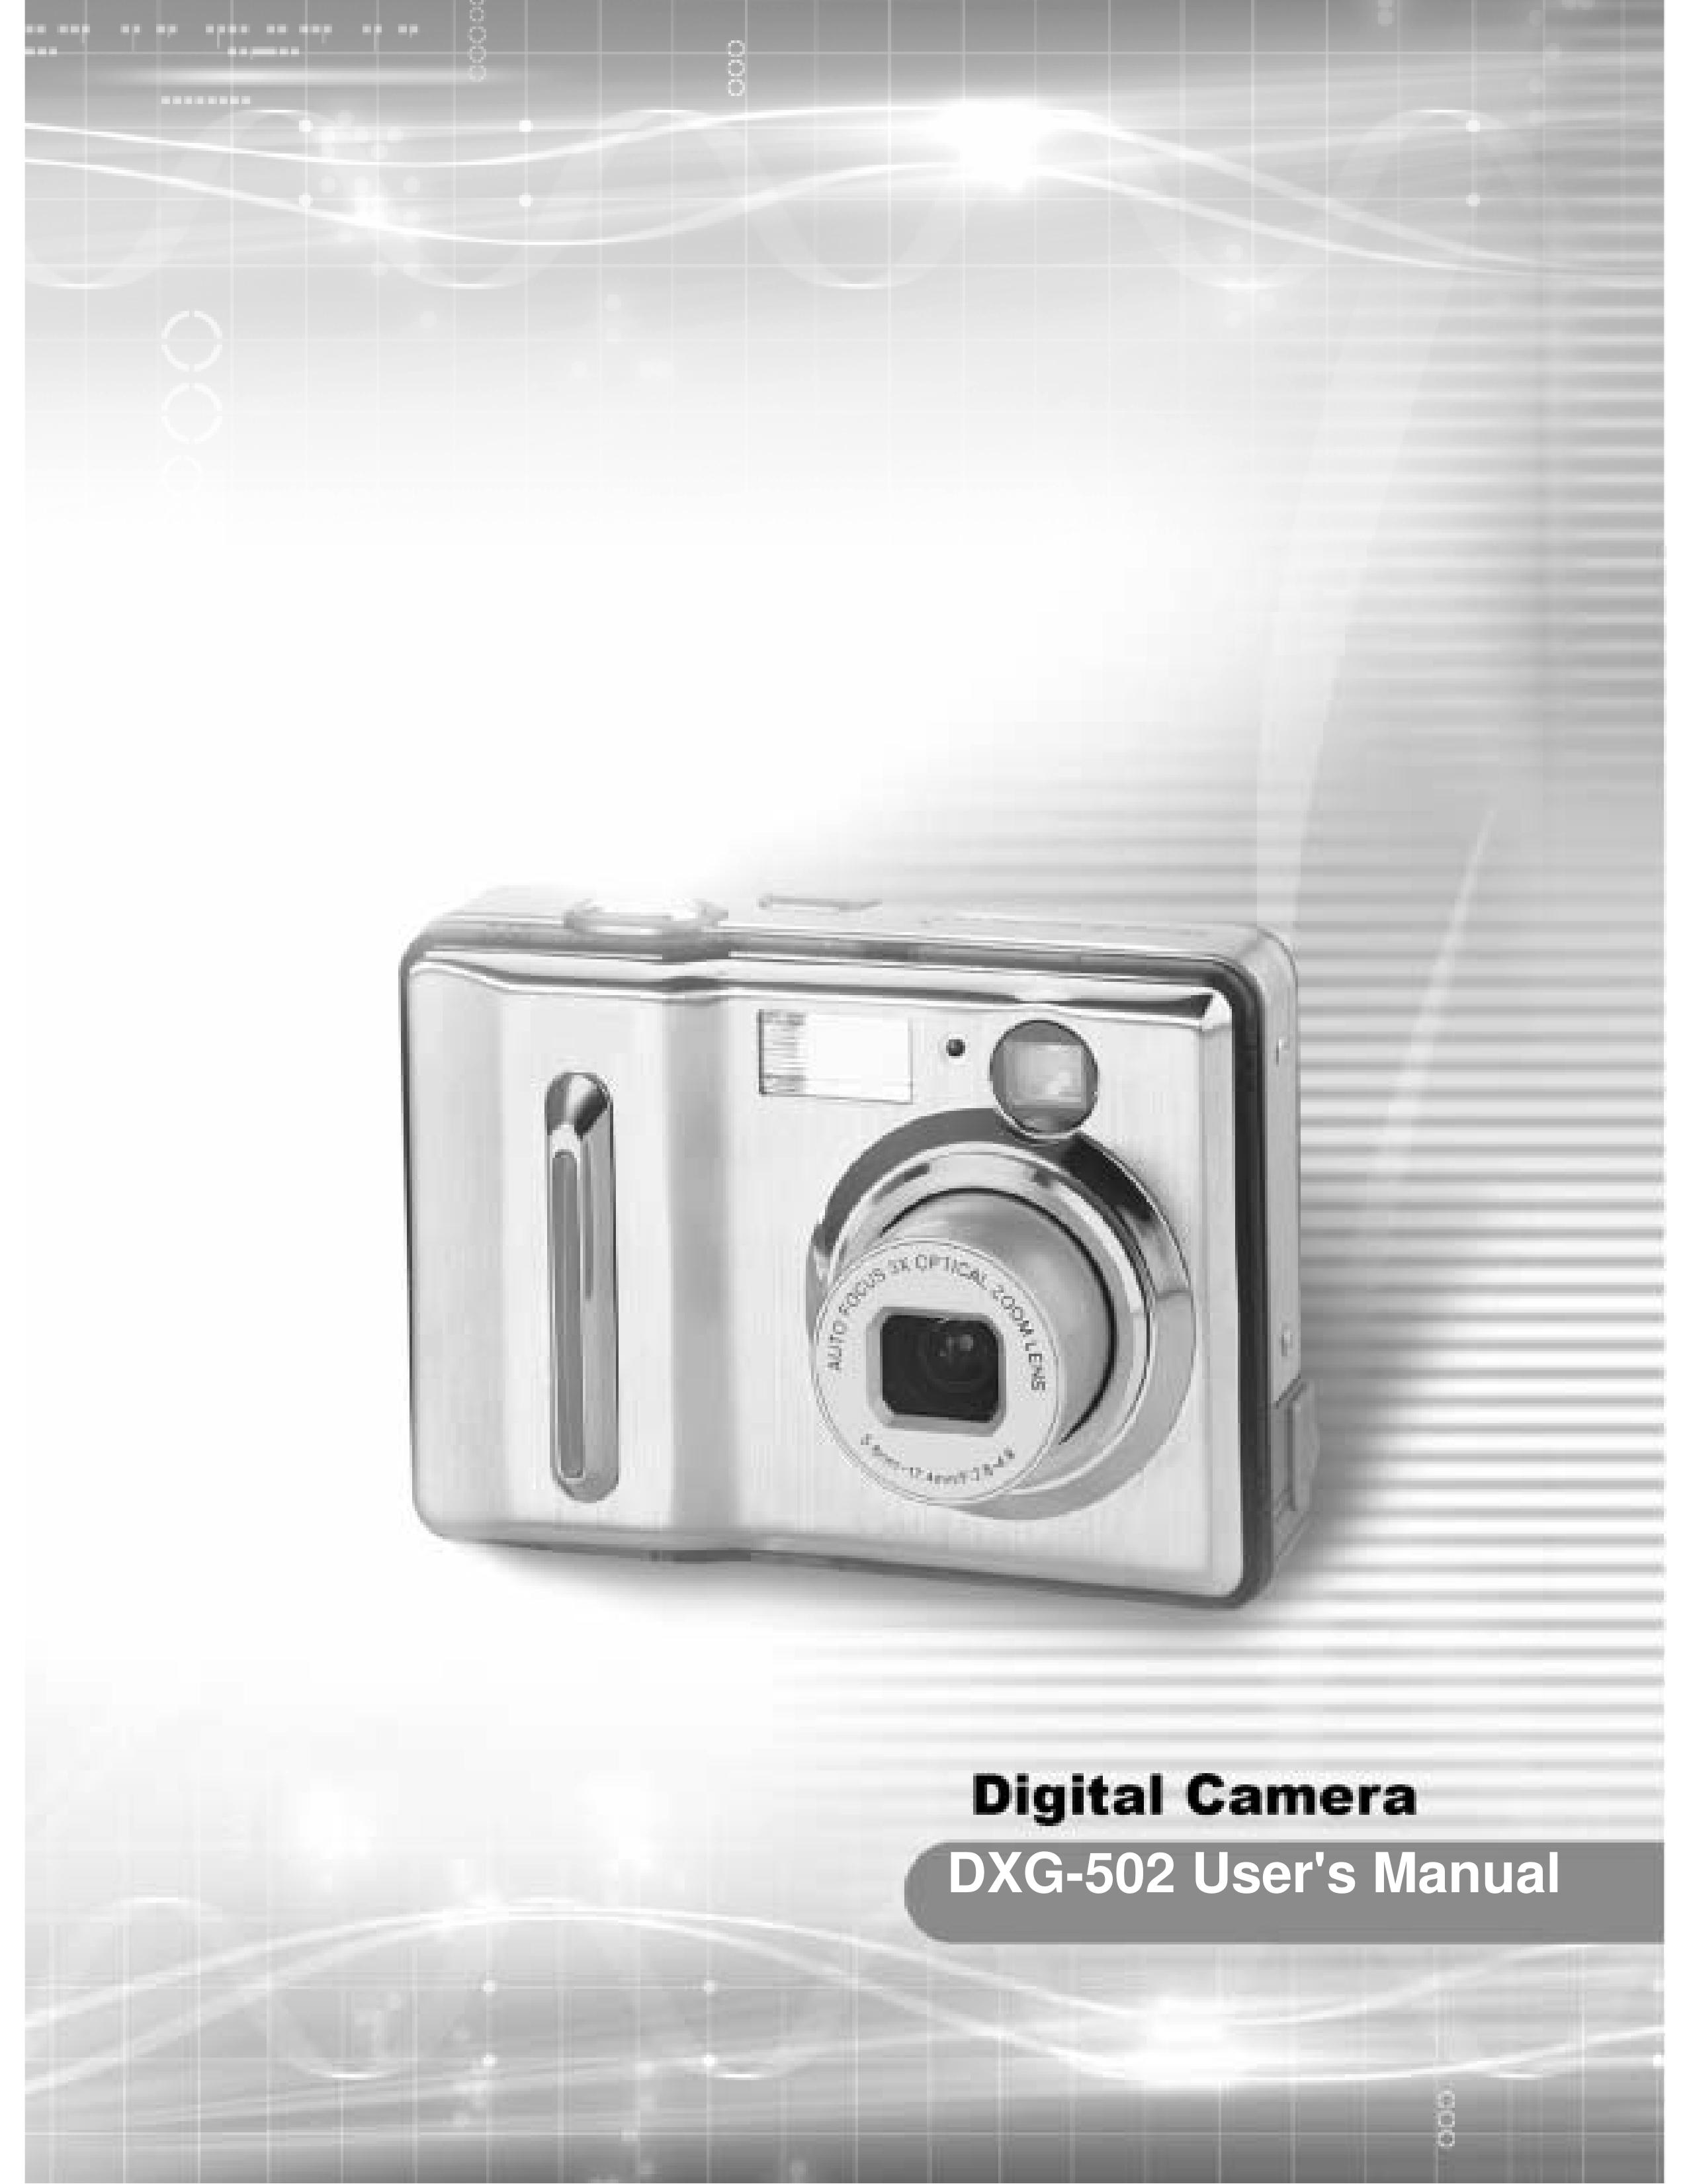 DXG Technology DXG-502 Digital Camera User Manual